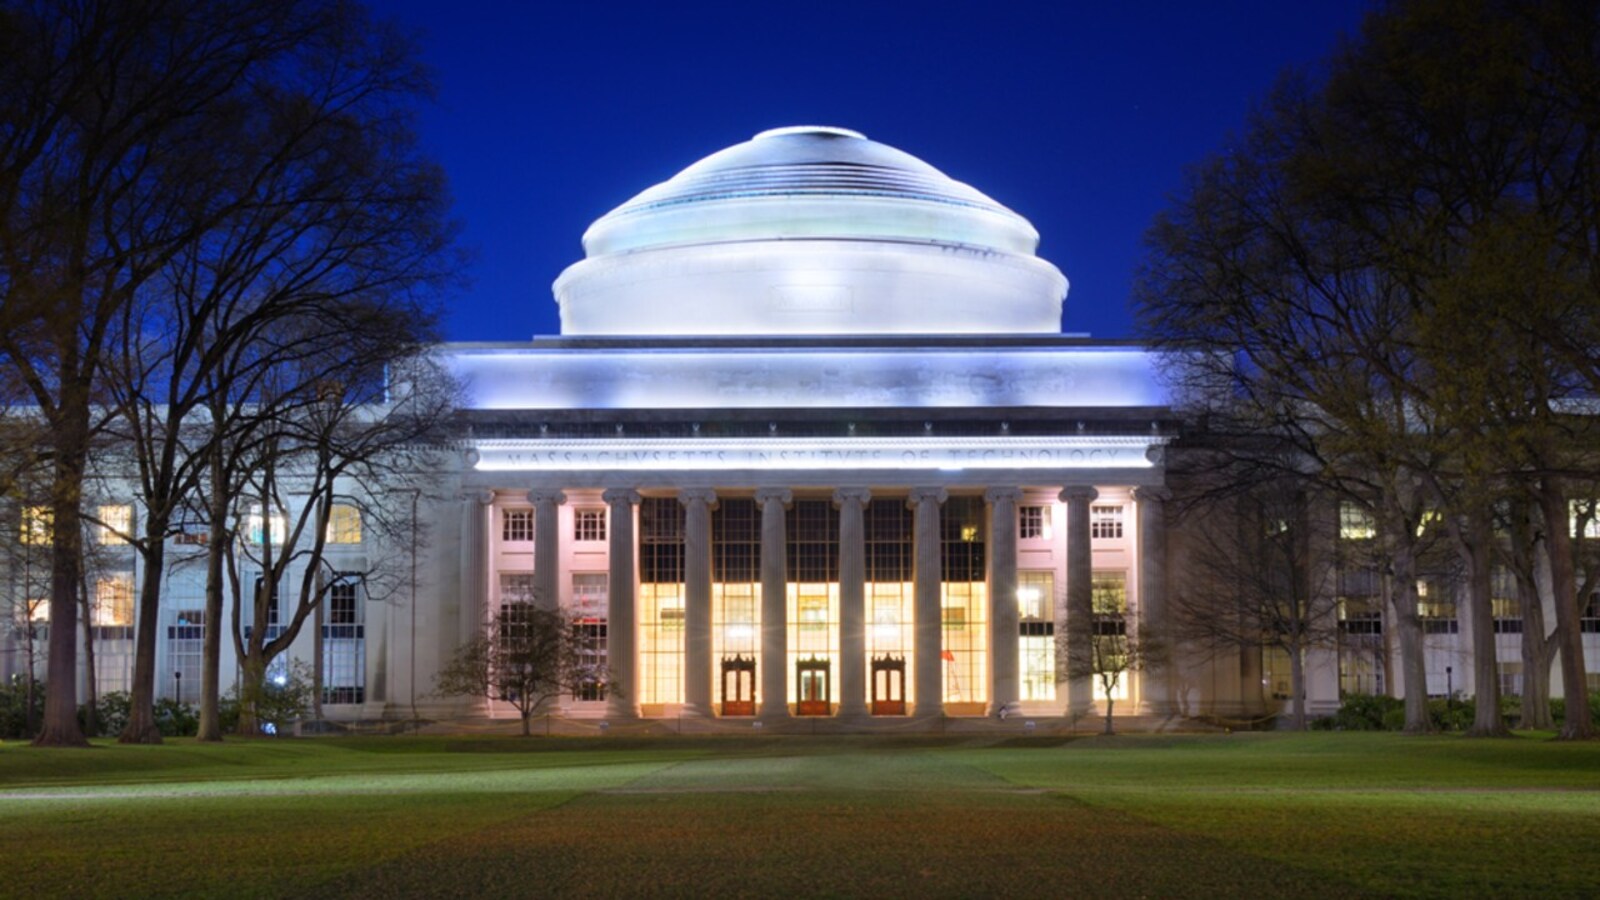 QS ranks MIT the world's No. 1 university for 2022-23, MIT News